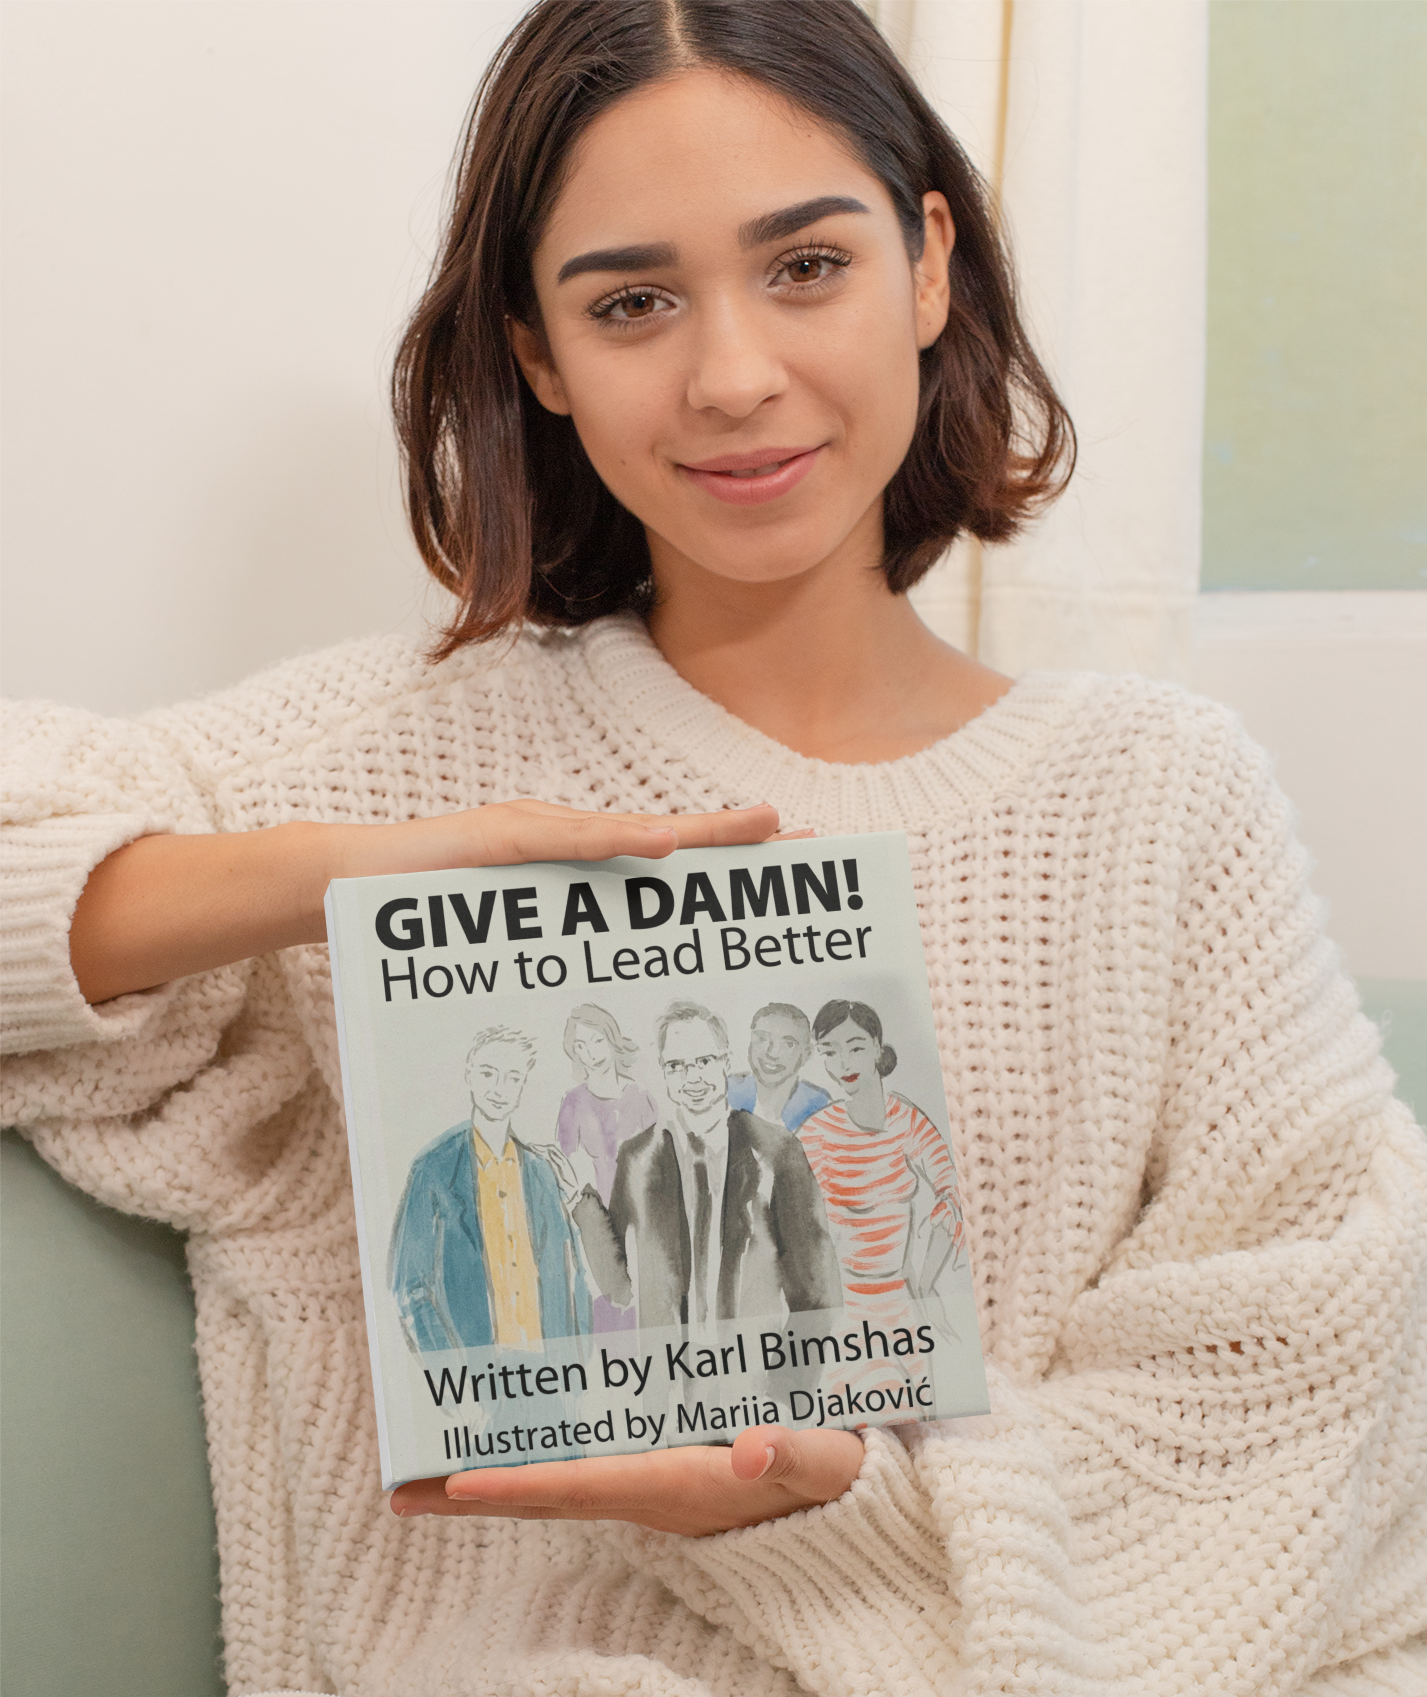 Give A Damn! by Karl Bimshas